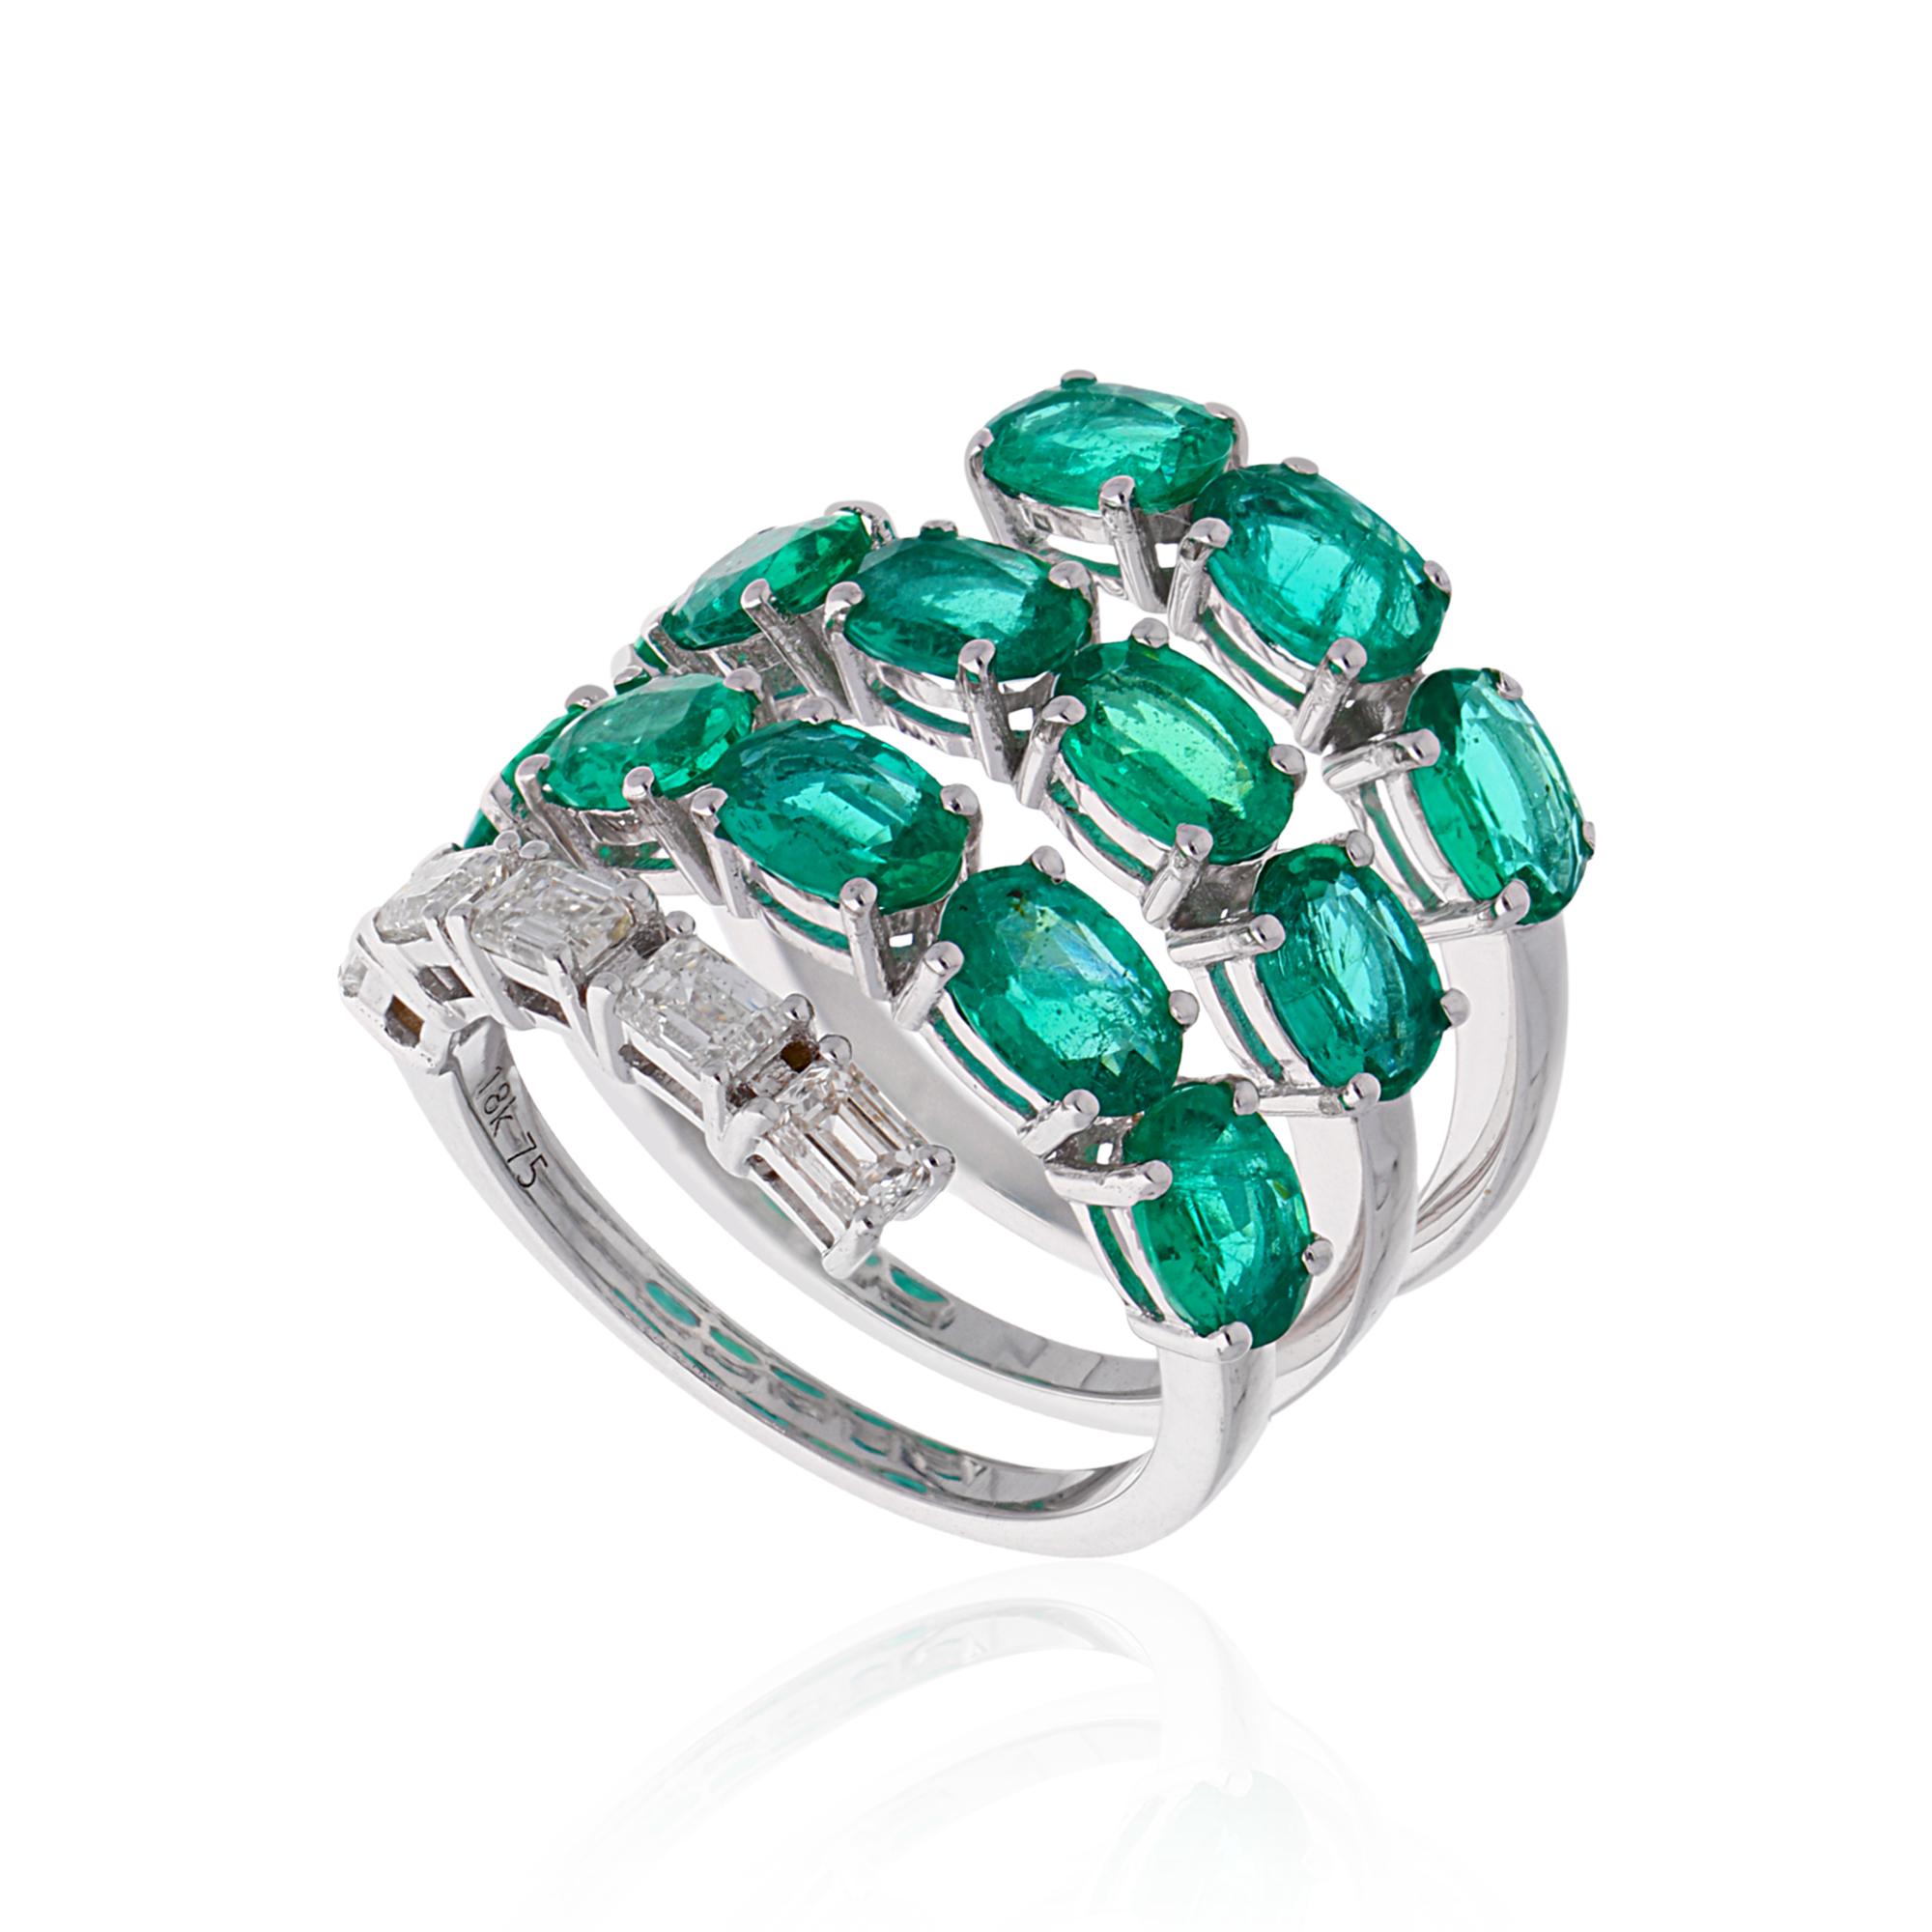 For Sale:  Natural Oval Gemstone Spiral Ring Emerald Cut Diamond 18 Karat White Gold 5